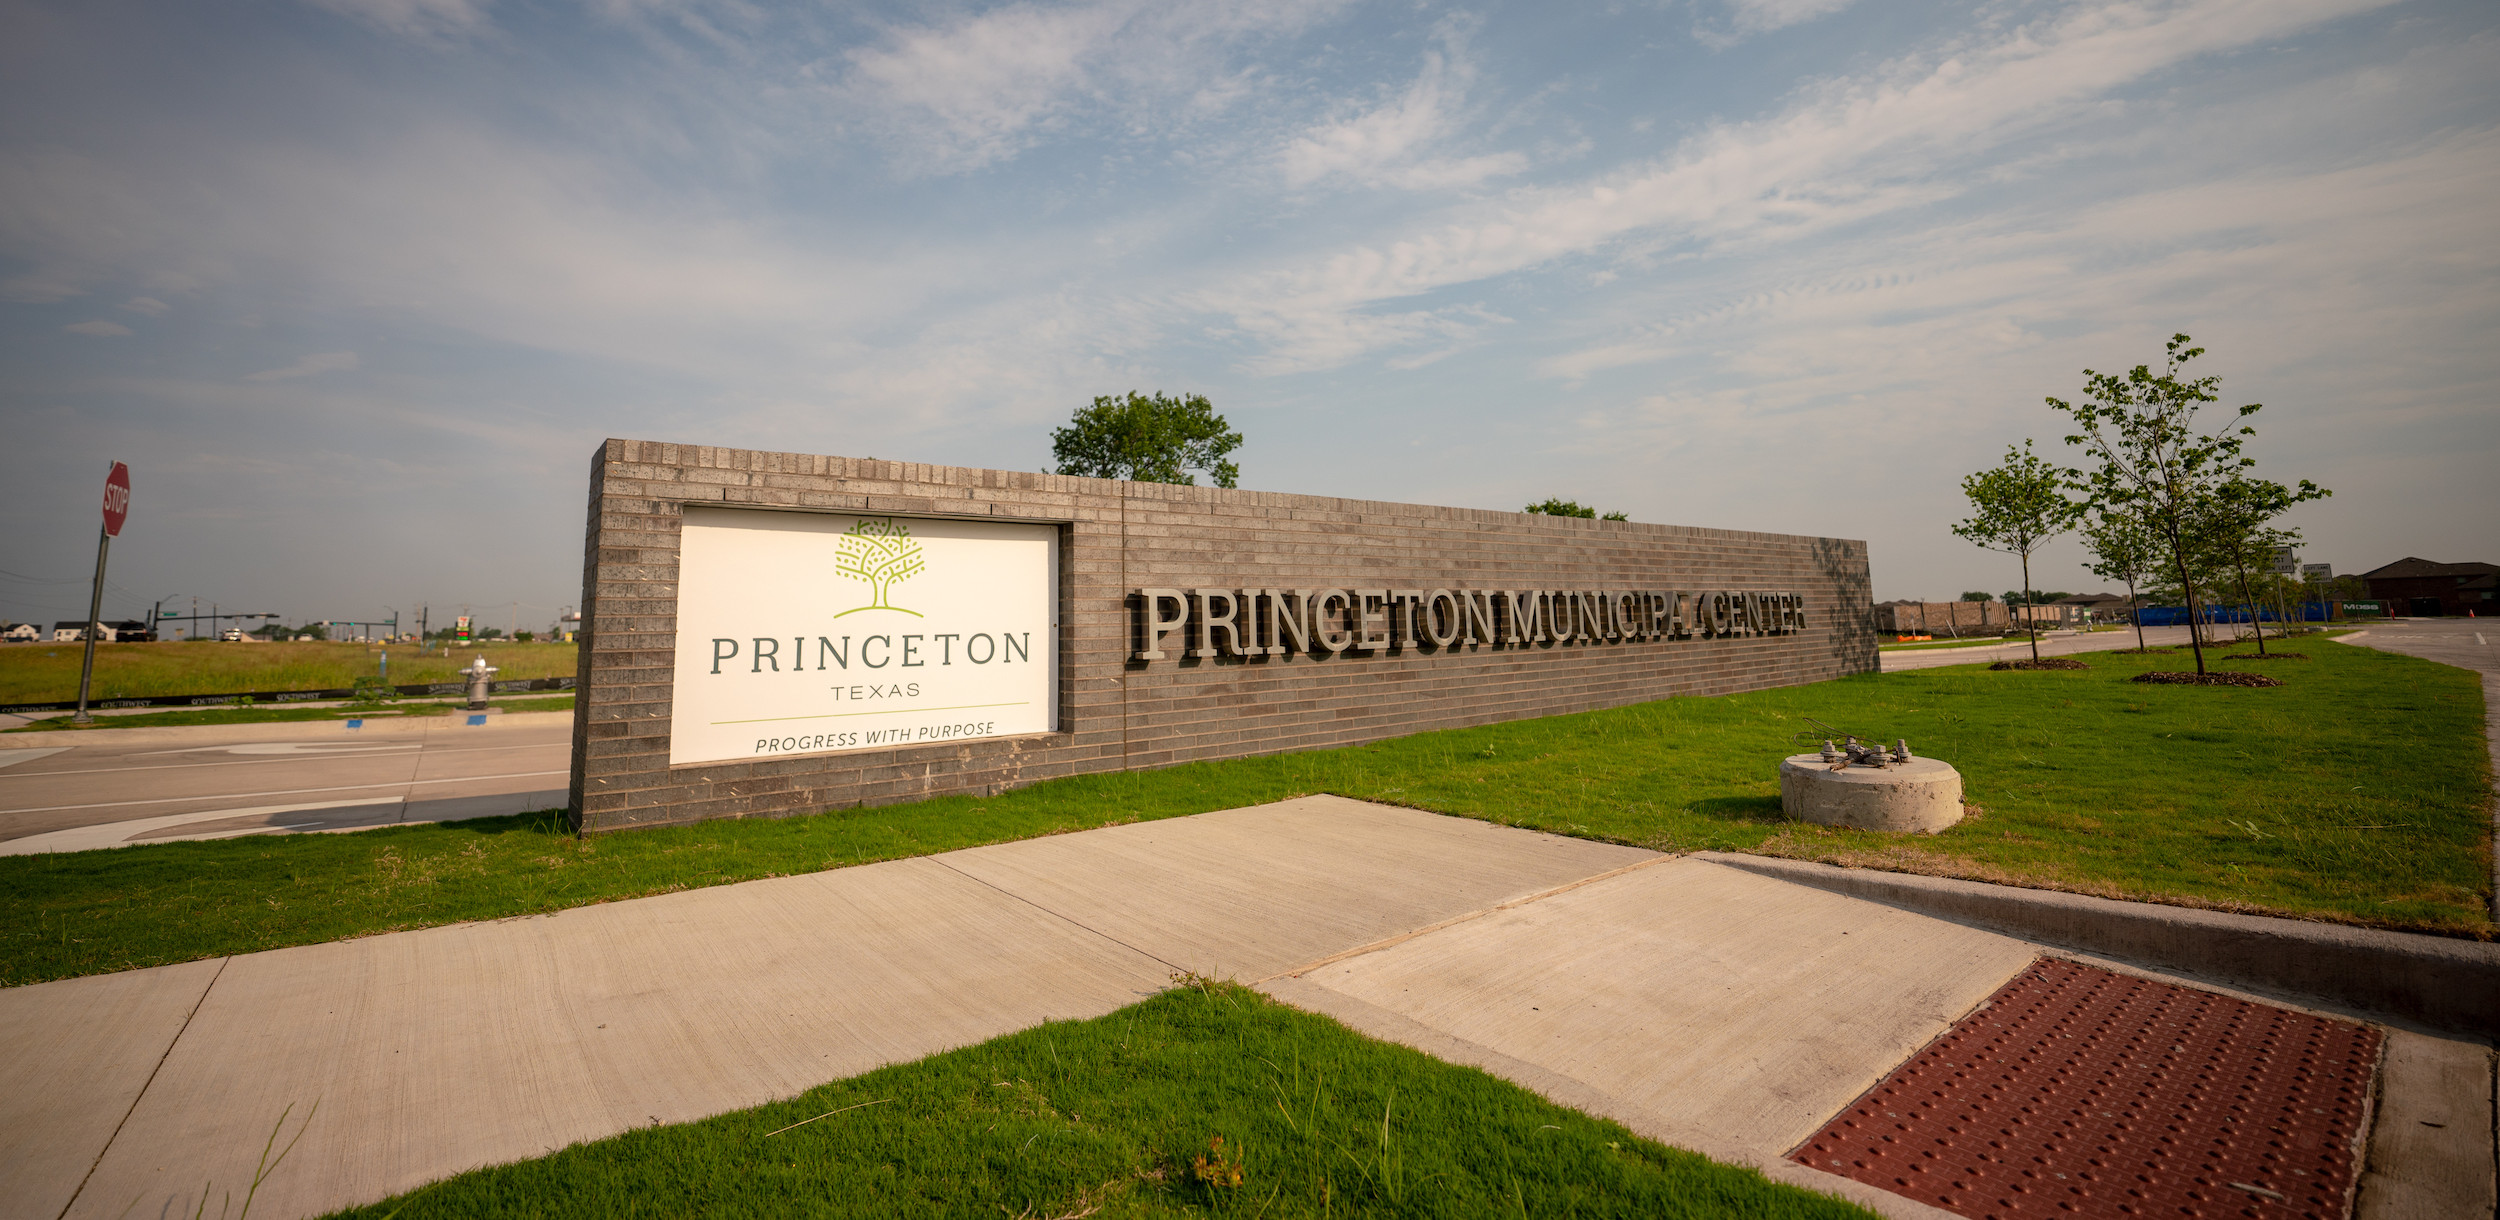 Princeton Municipal Center sign